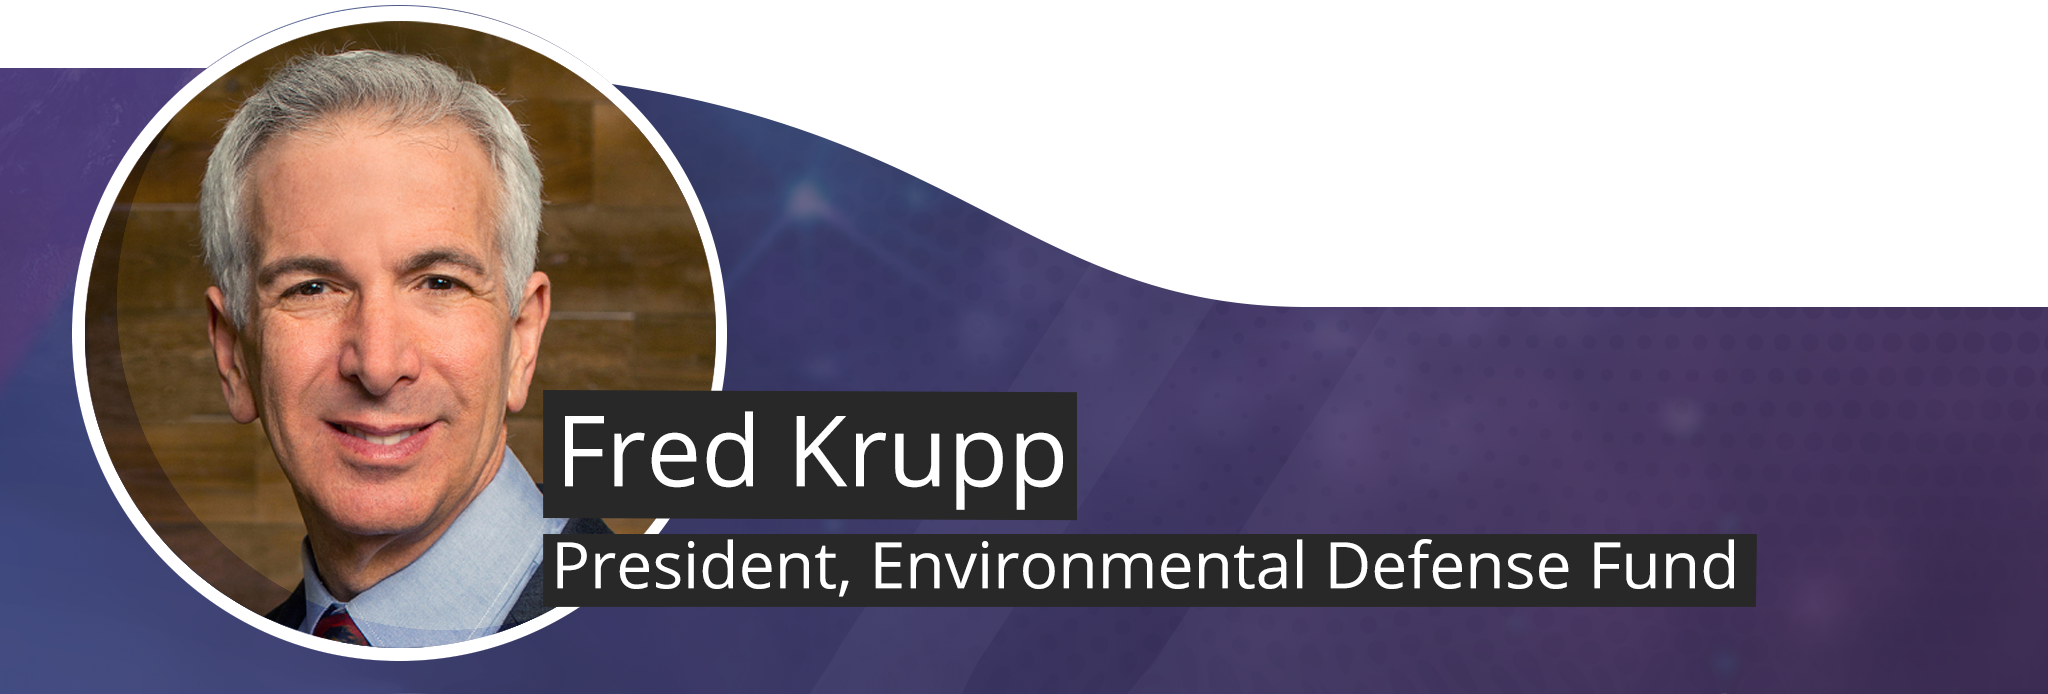 Headshot of Fred Krupp, President, Environmental Defense Fund